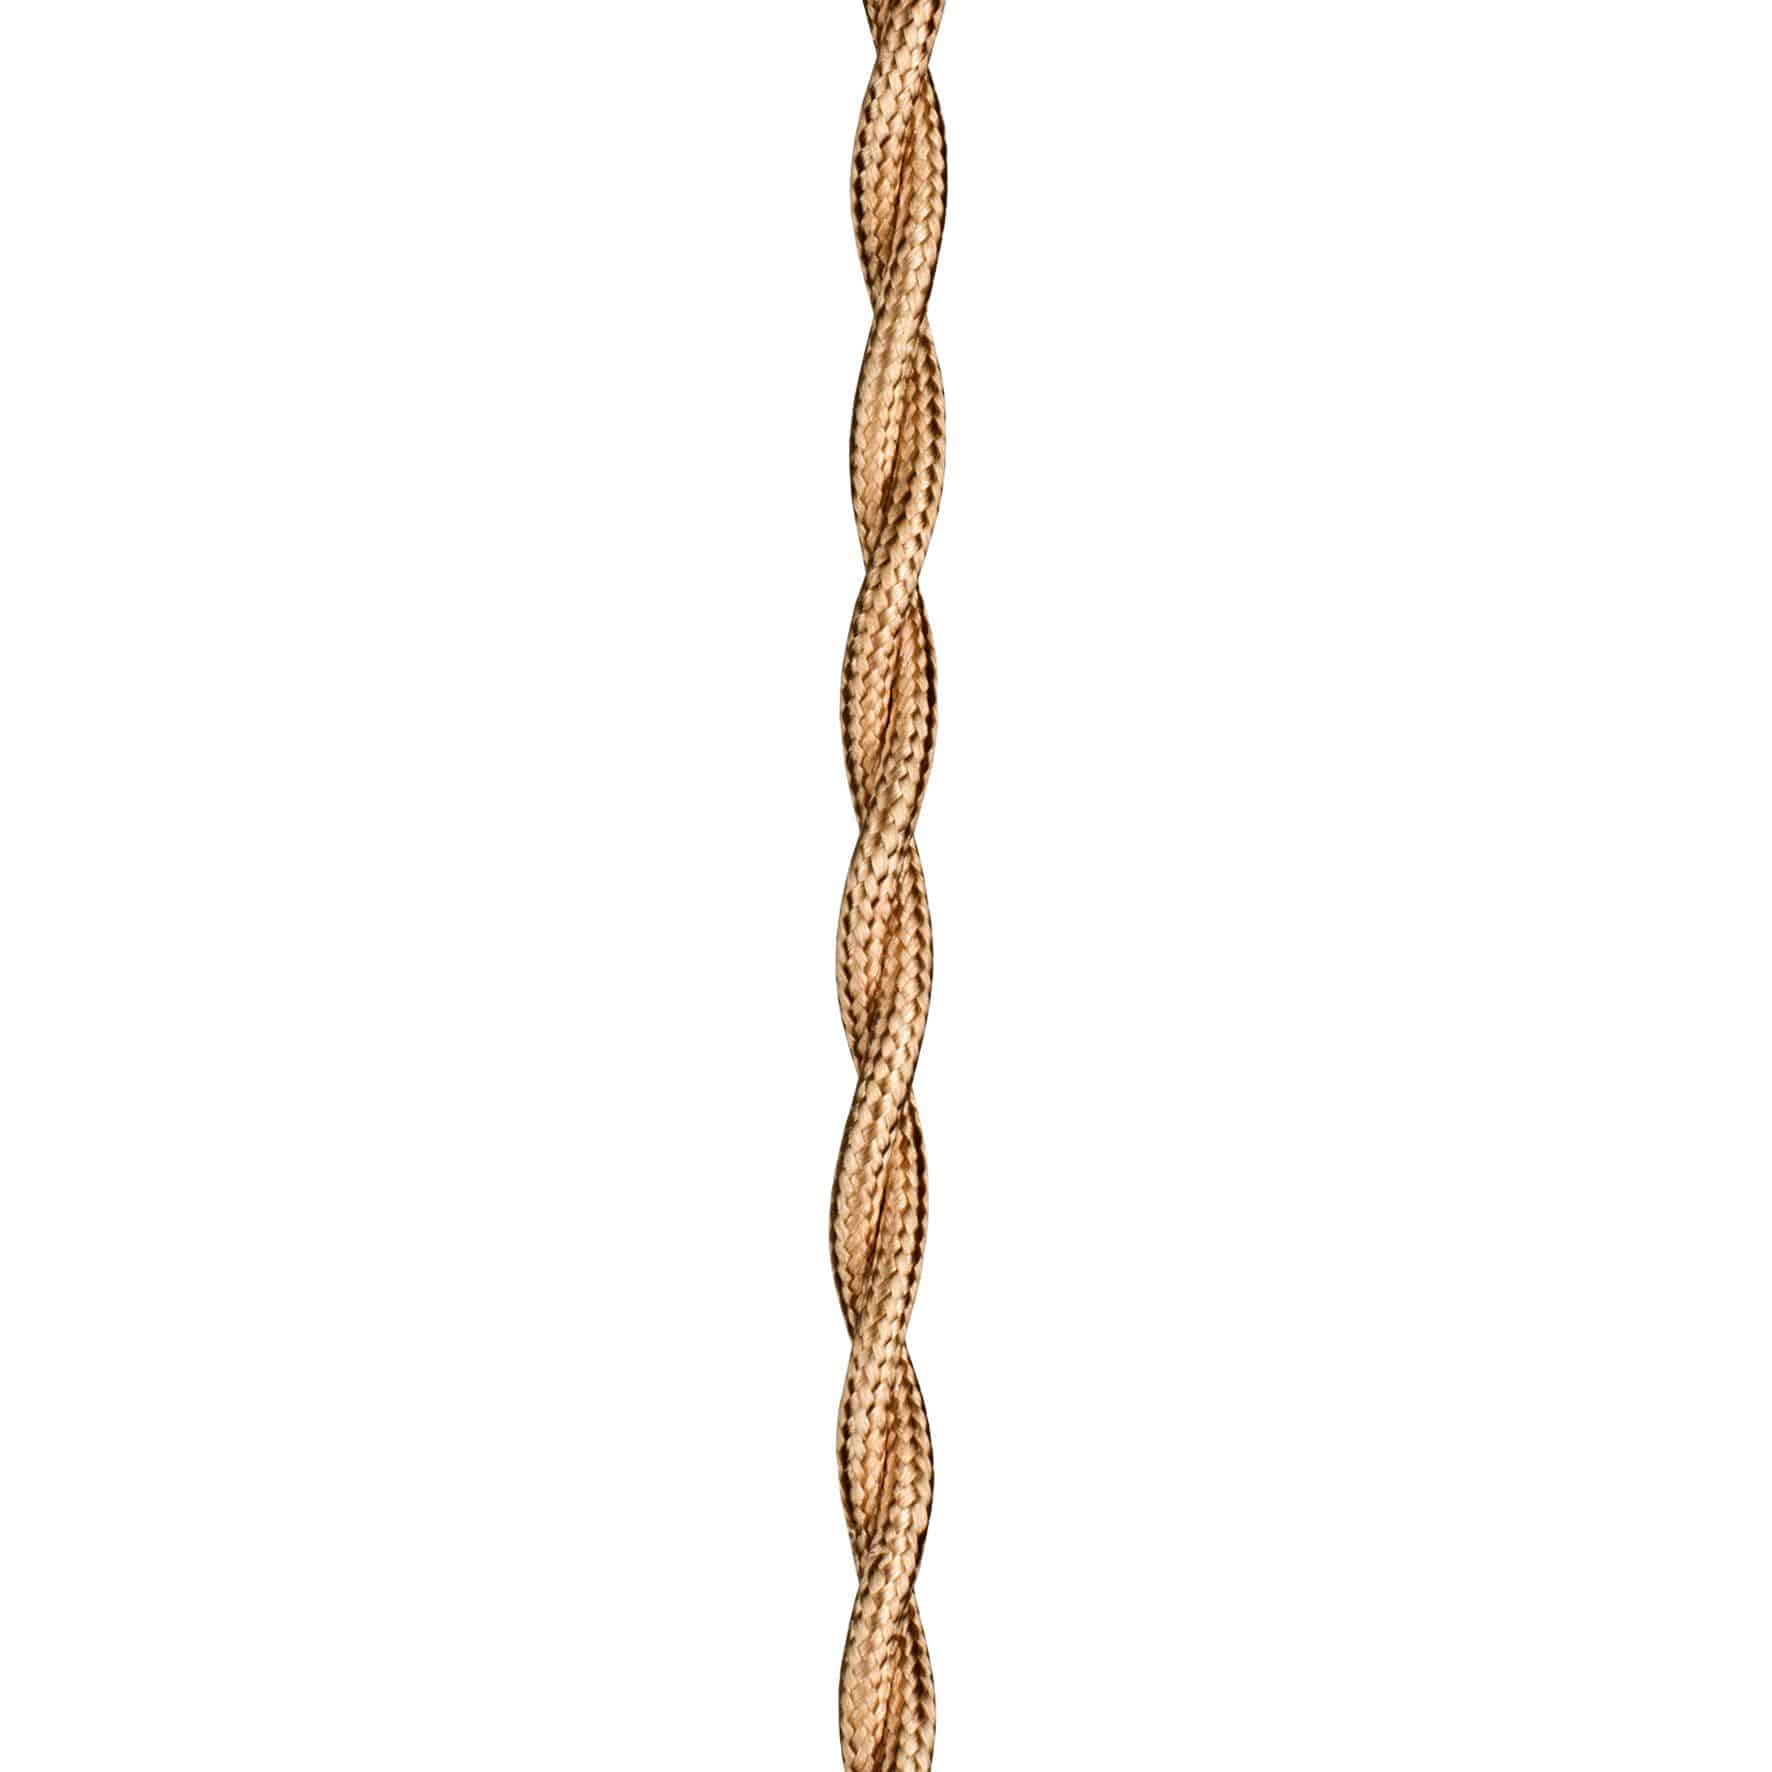 BAILEY 140316 Textilkabel 2x0,75mm², gedreht, Länge 3m, champagner metallic